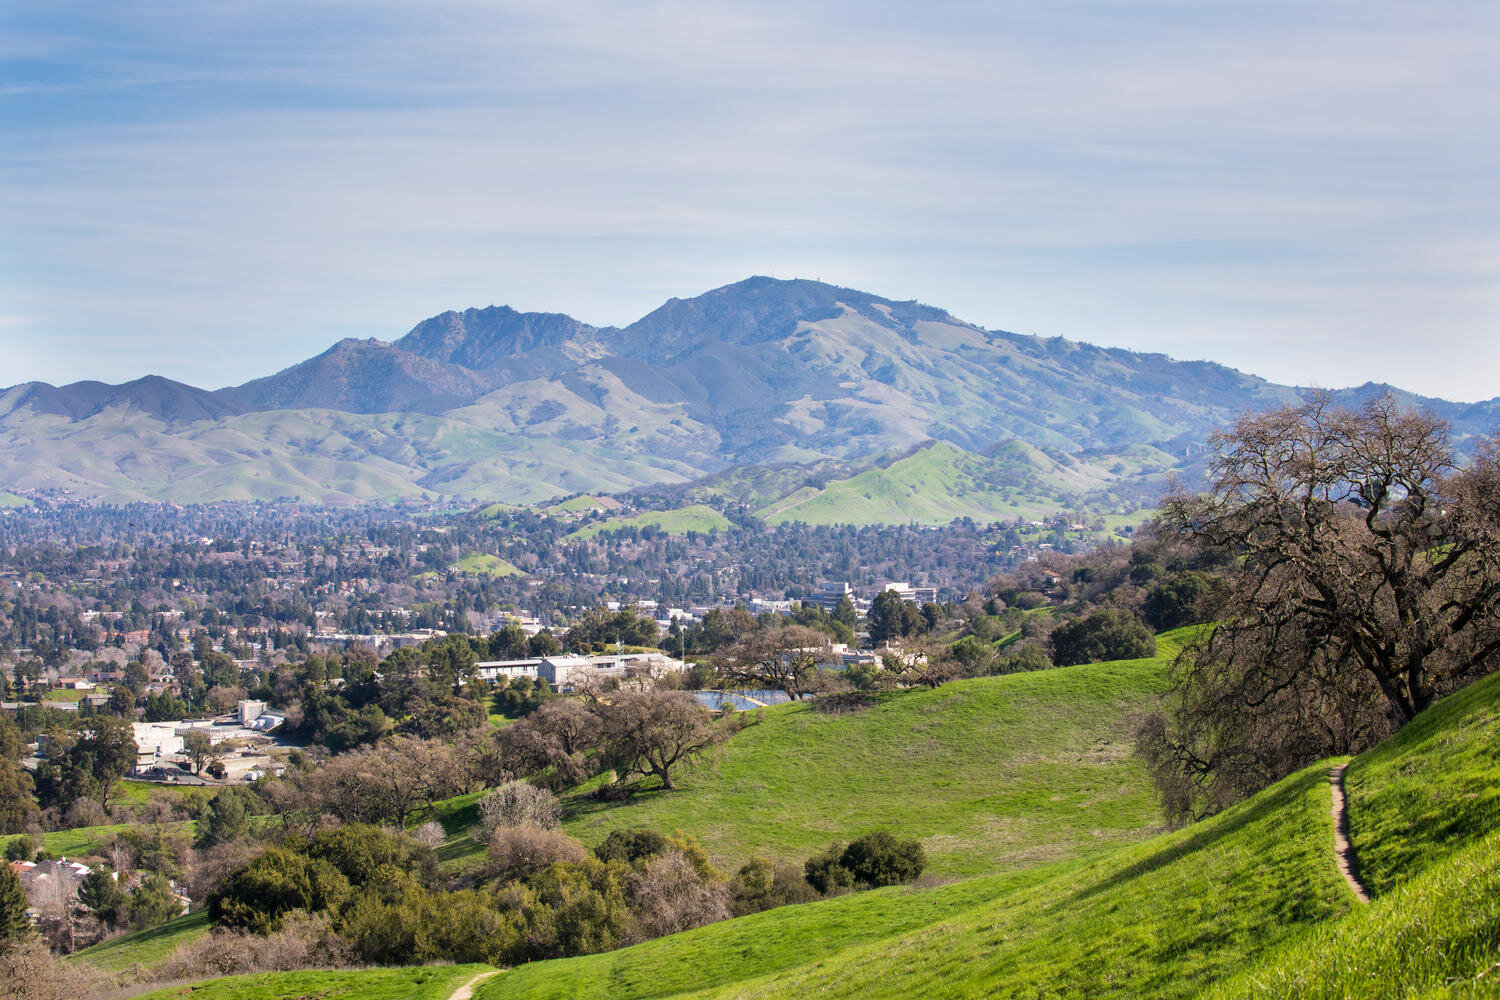 My home: Pleasant Hill, CA